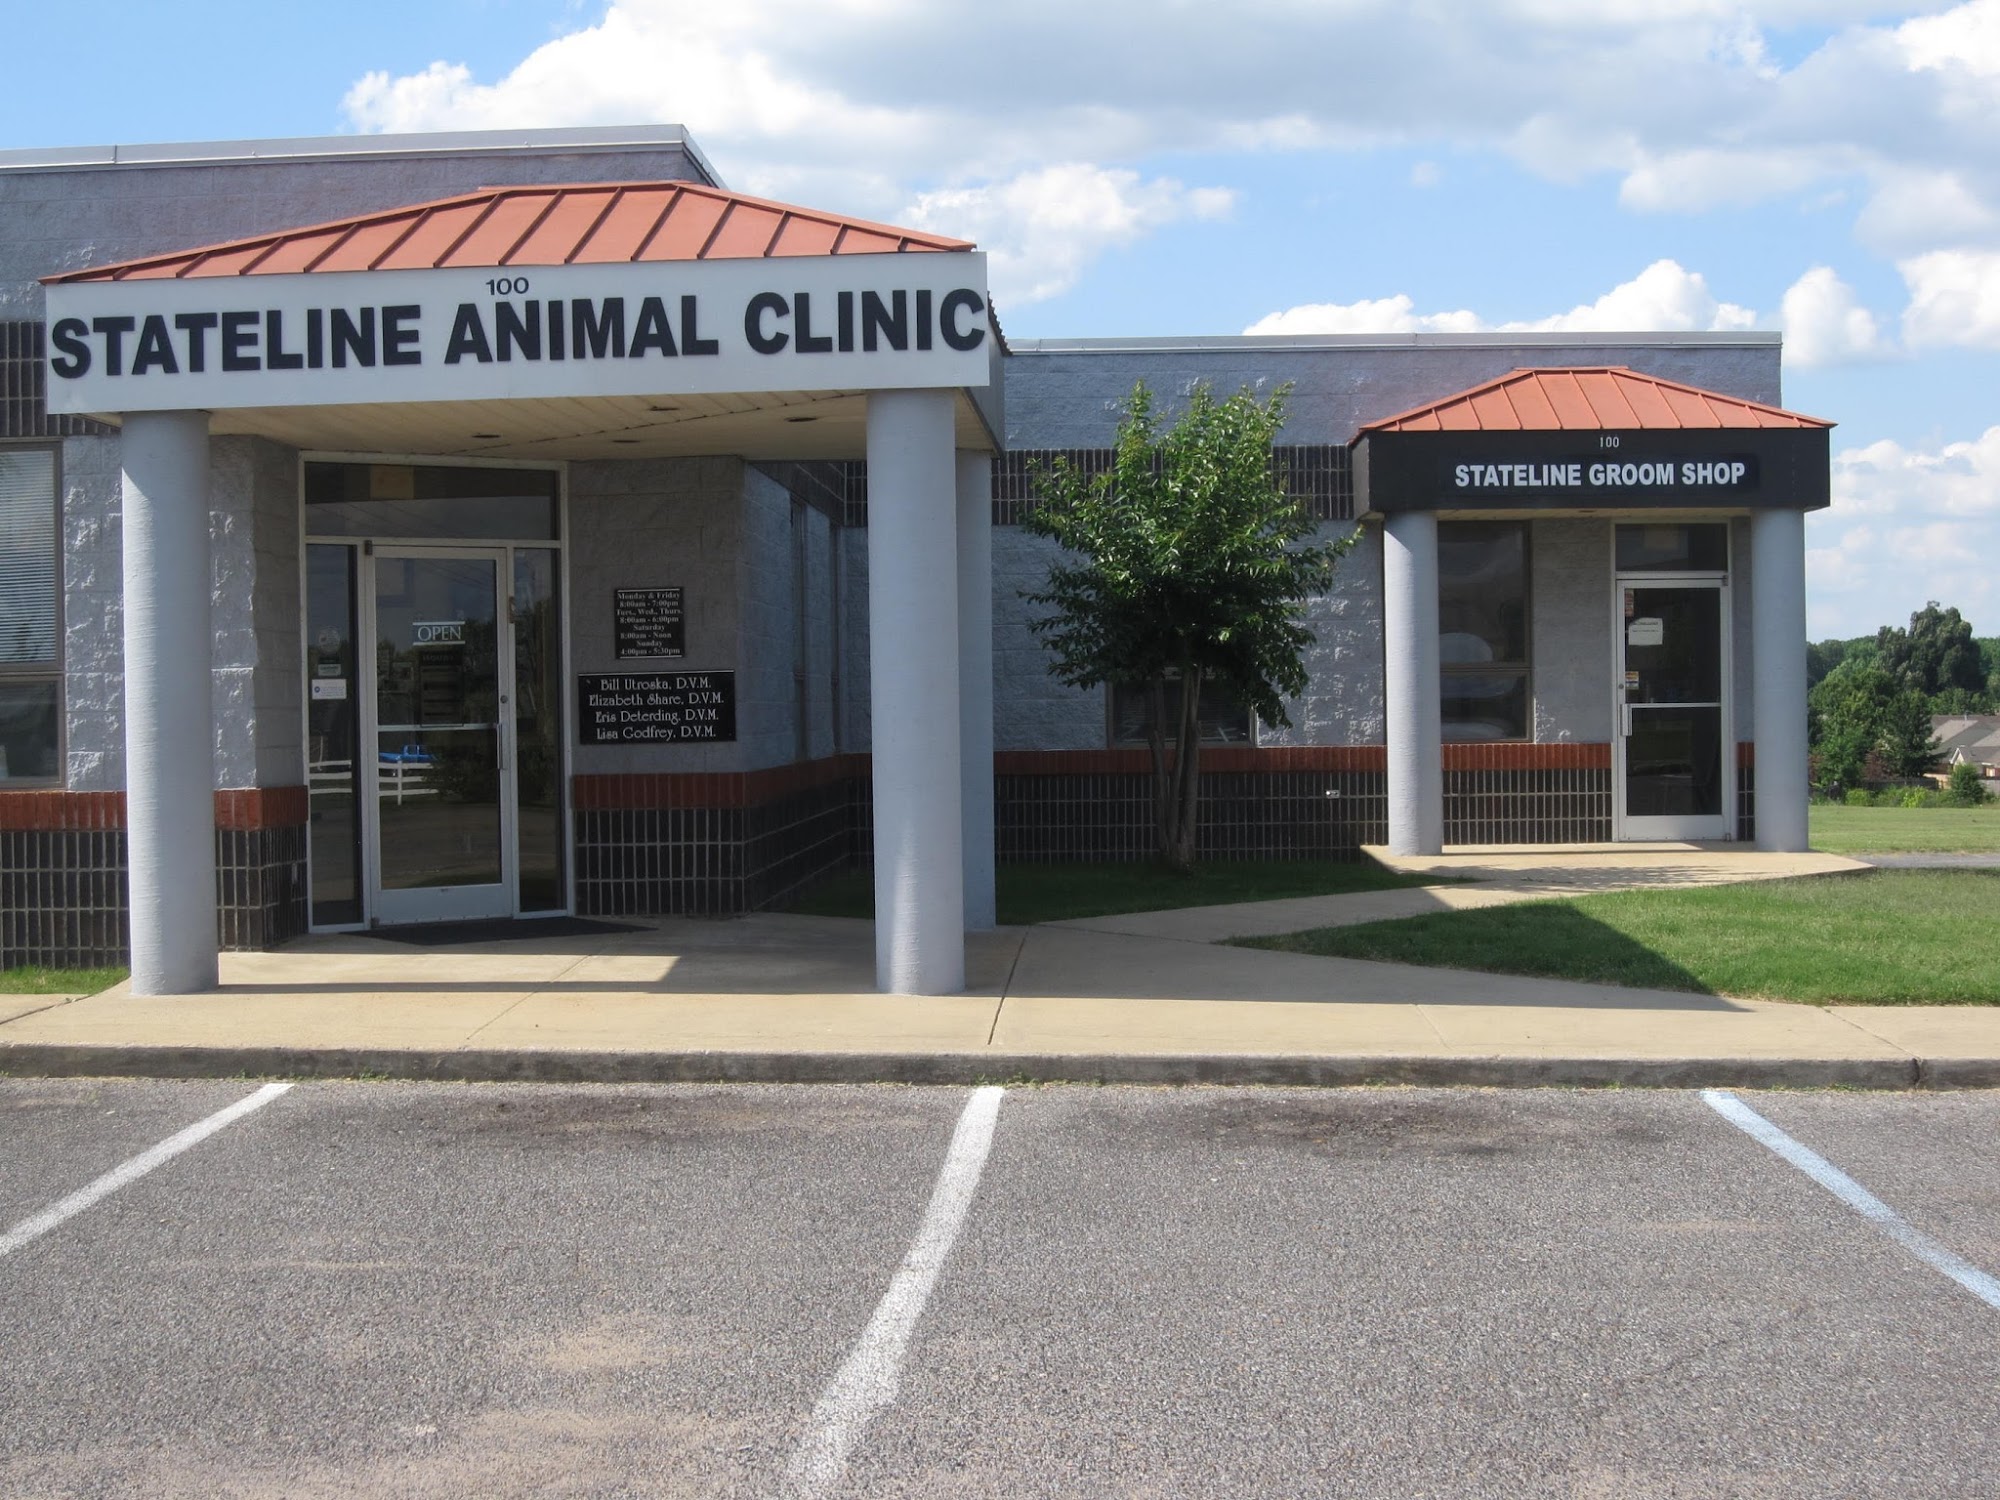 Stateline Animal Clinic: Share Elizabeth DVM